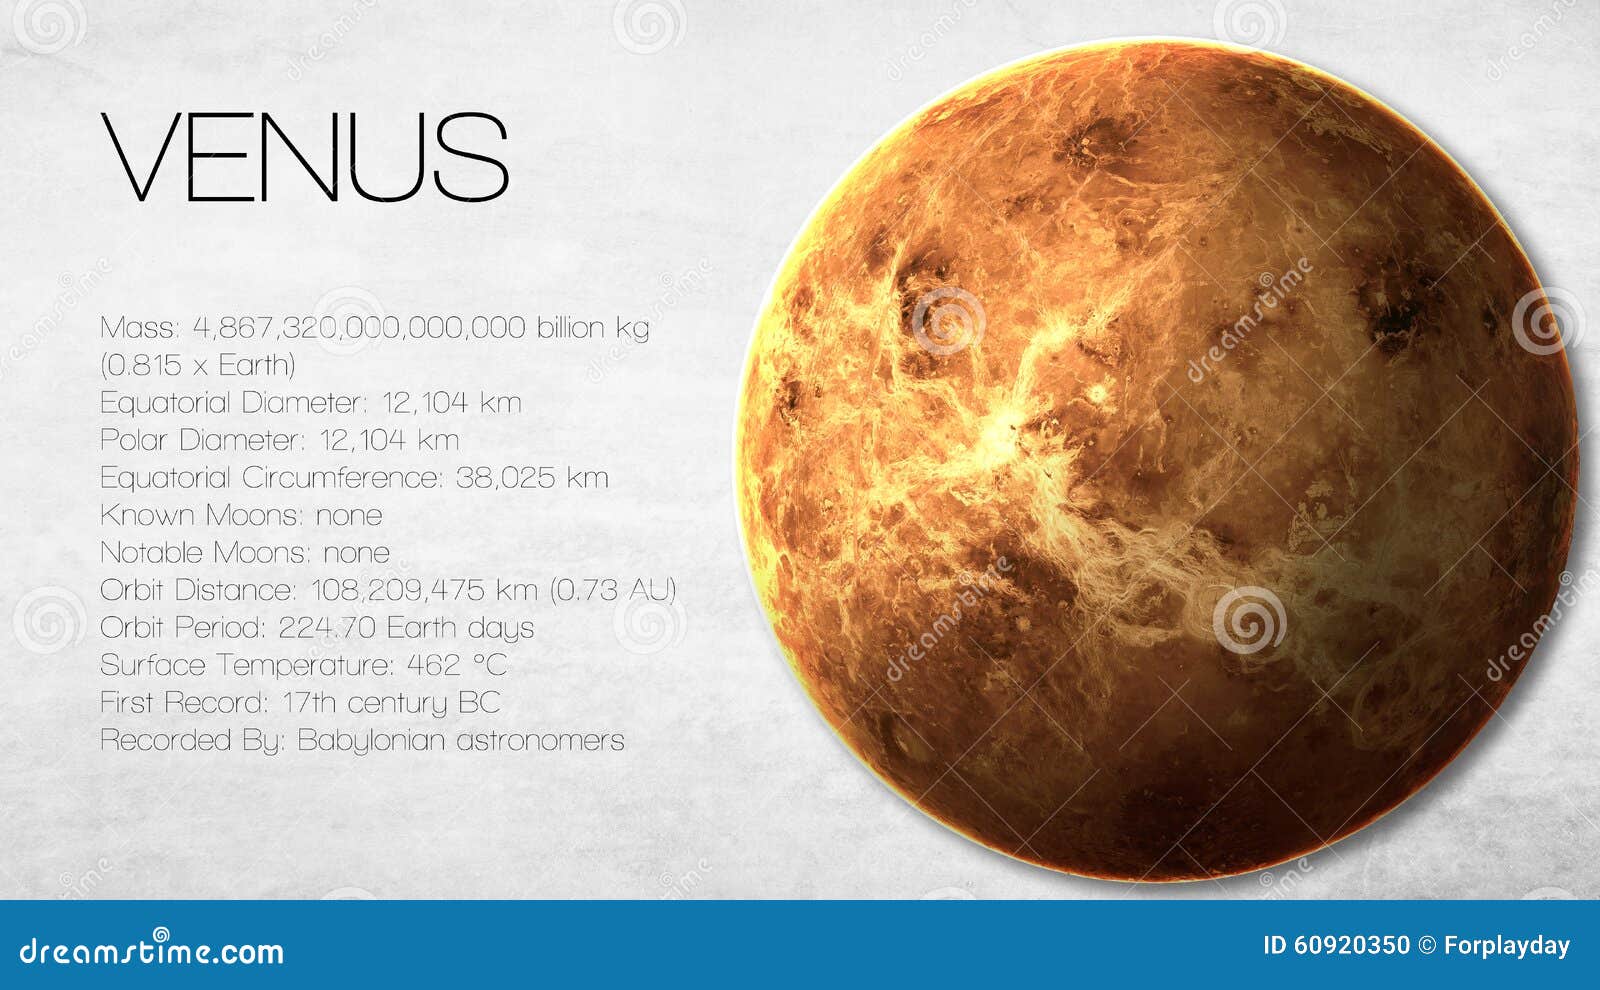 venus - high resolution infographic presents one